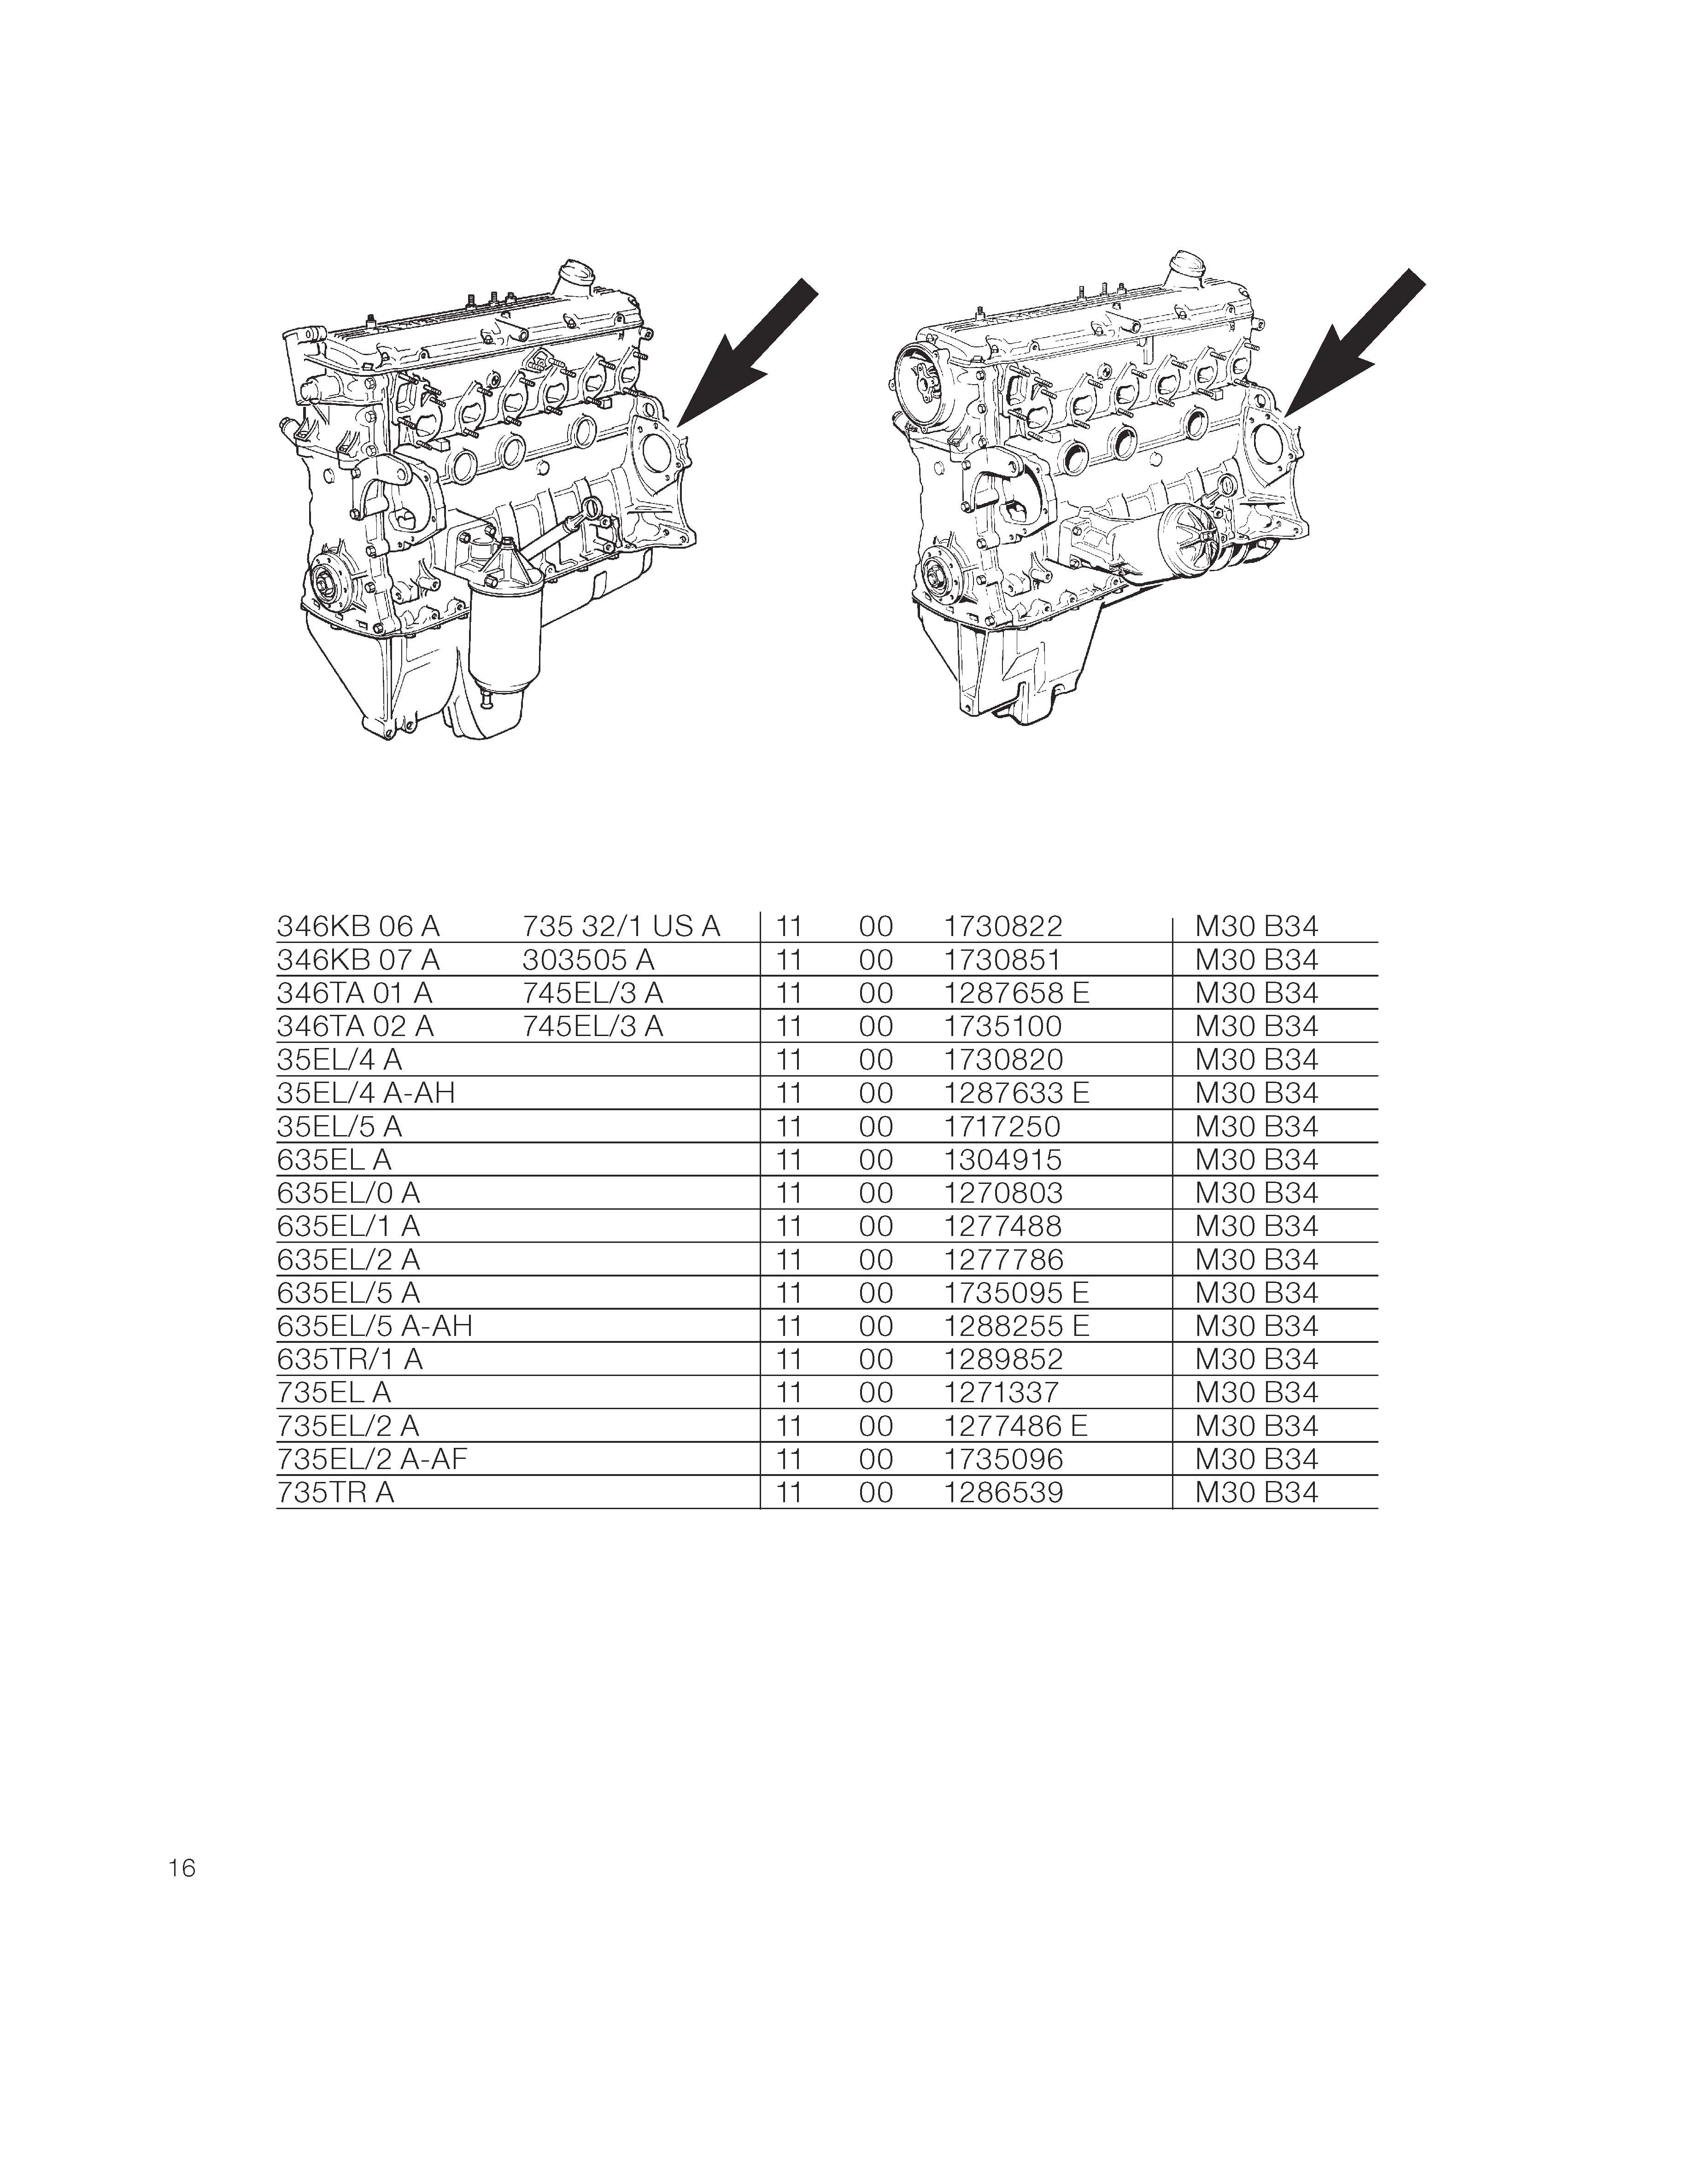 BMW M30 Engine Identification 3pp_Page_3.jpg